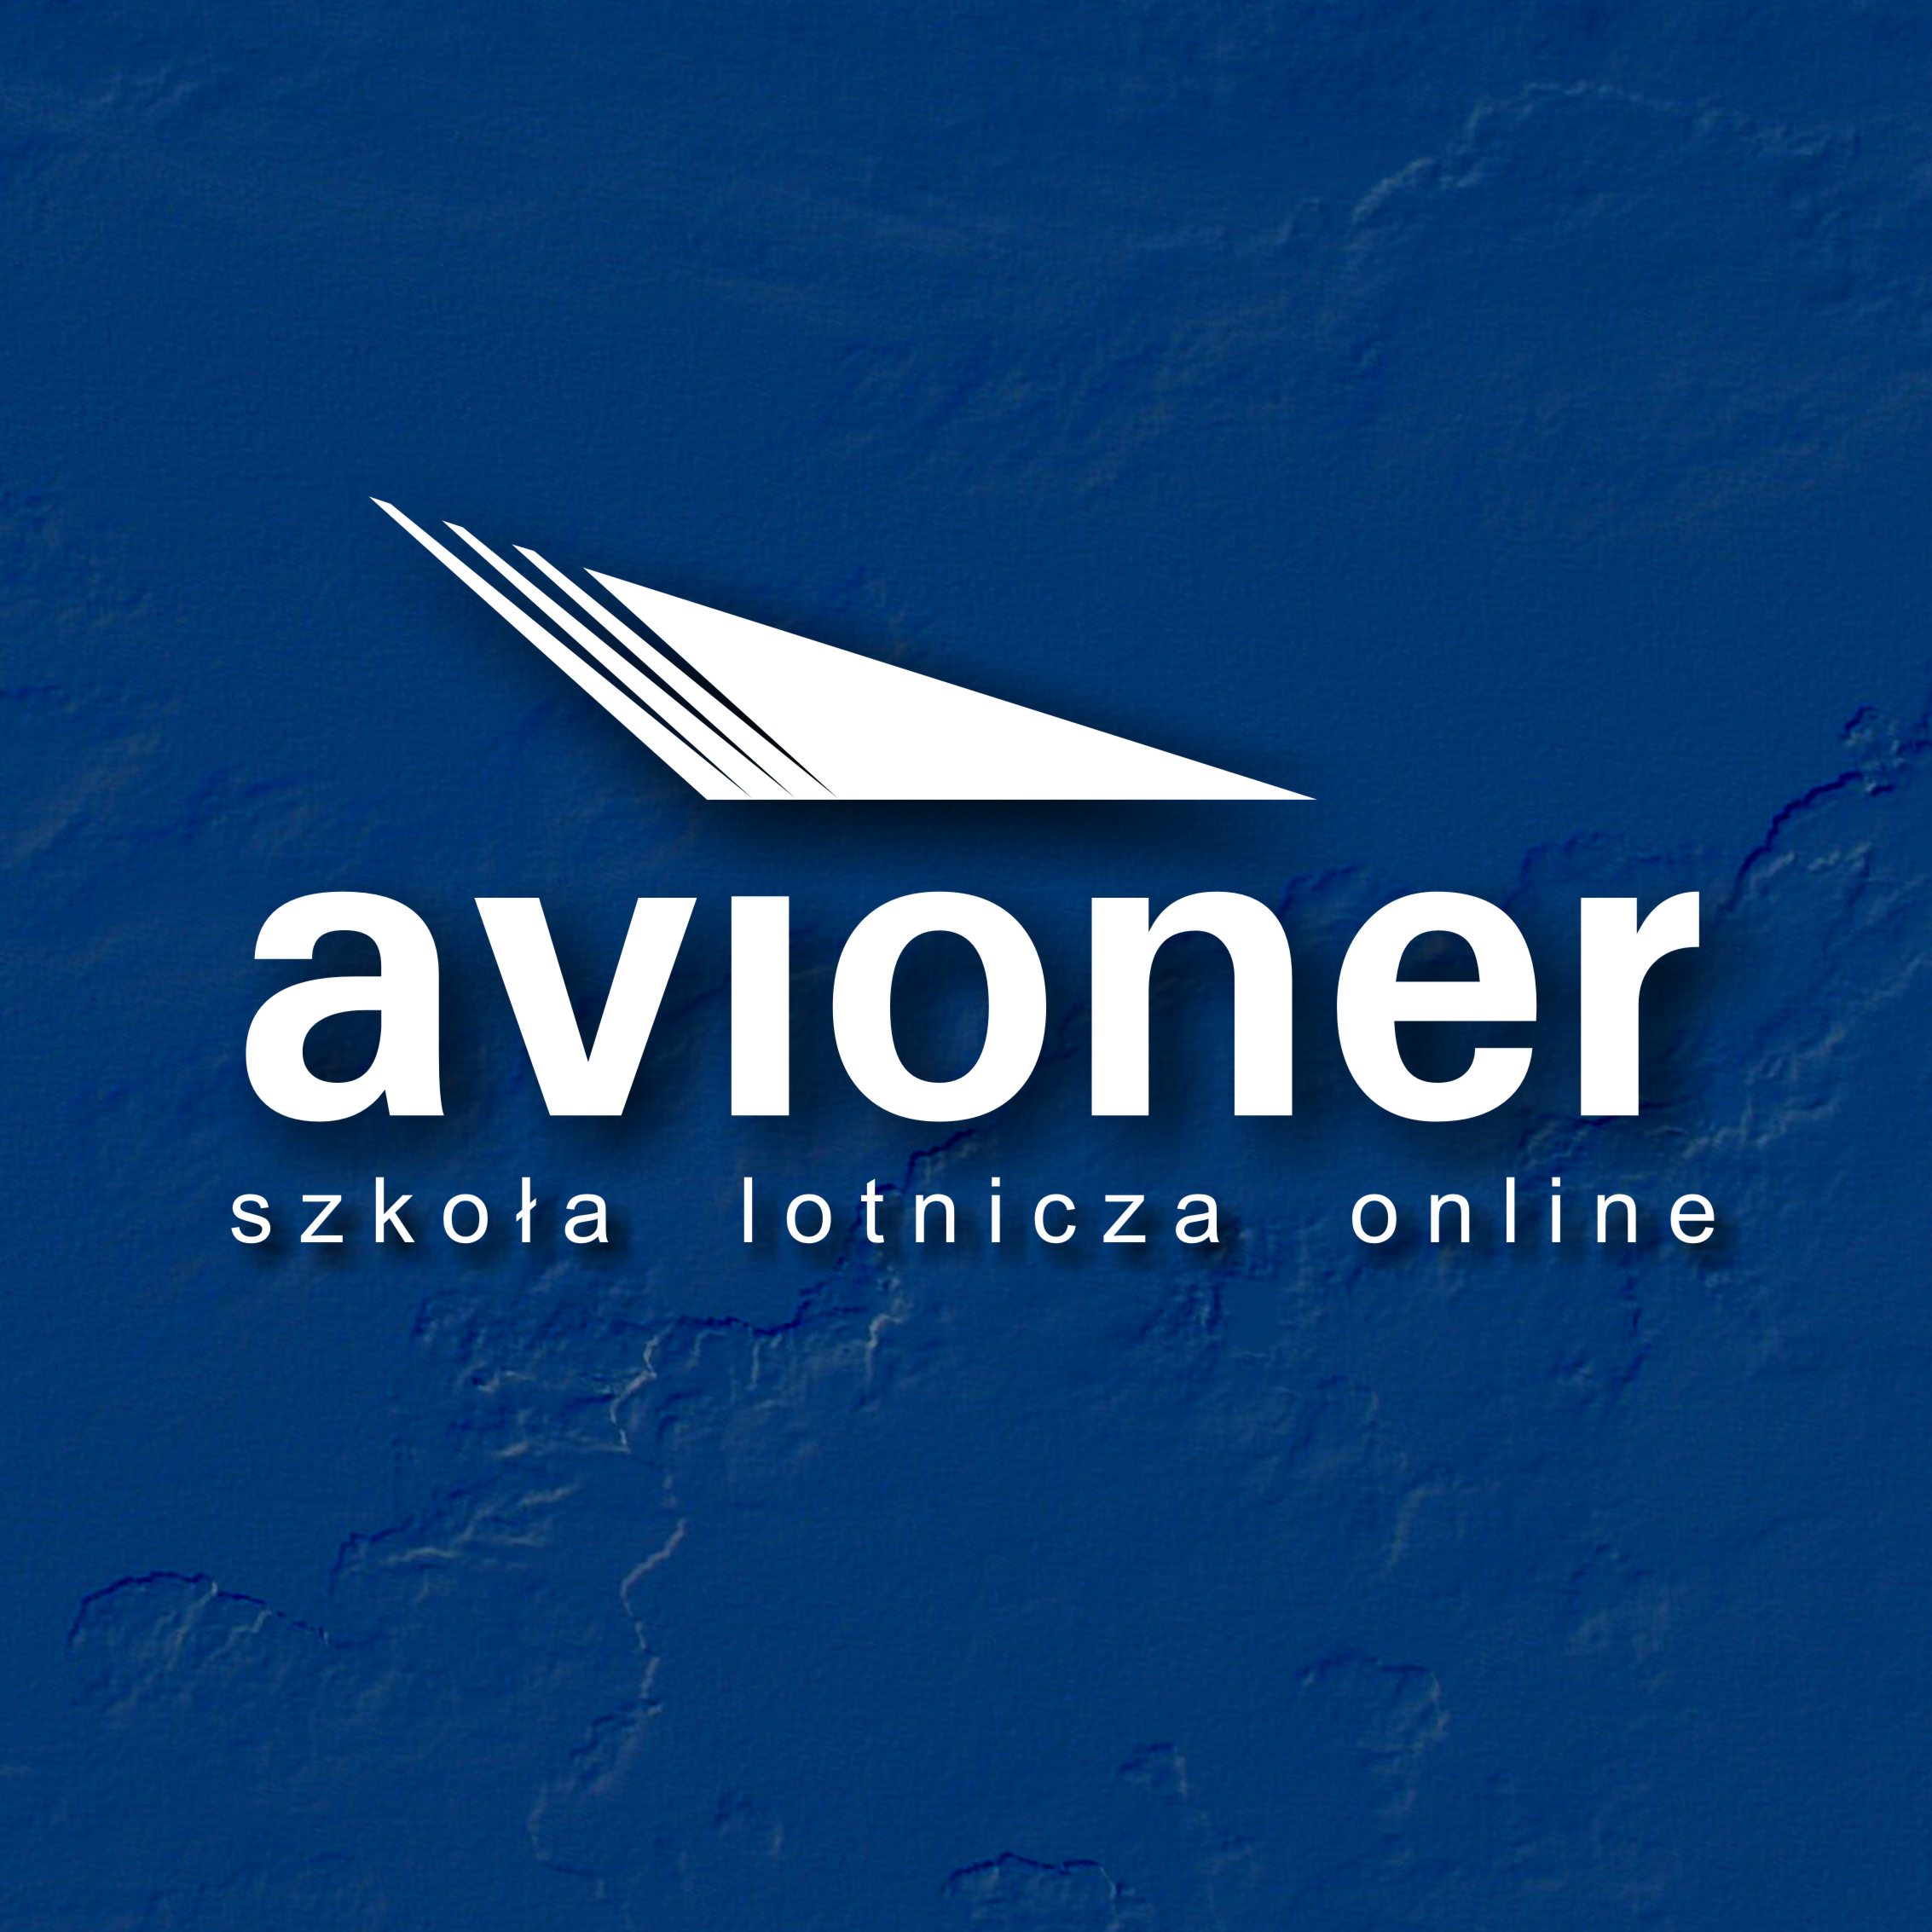 avioner_logo_baner_kwadrat_1